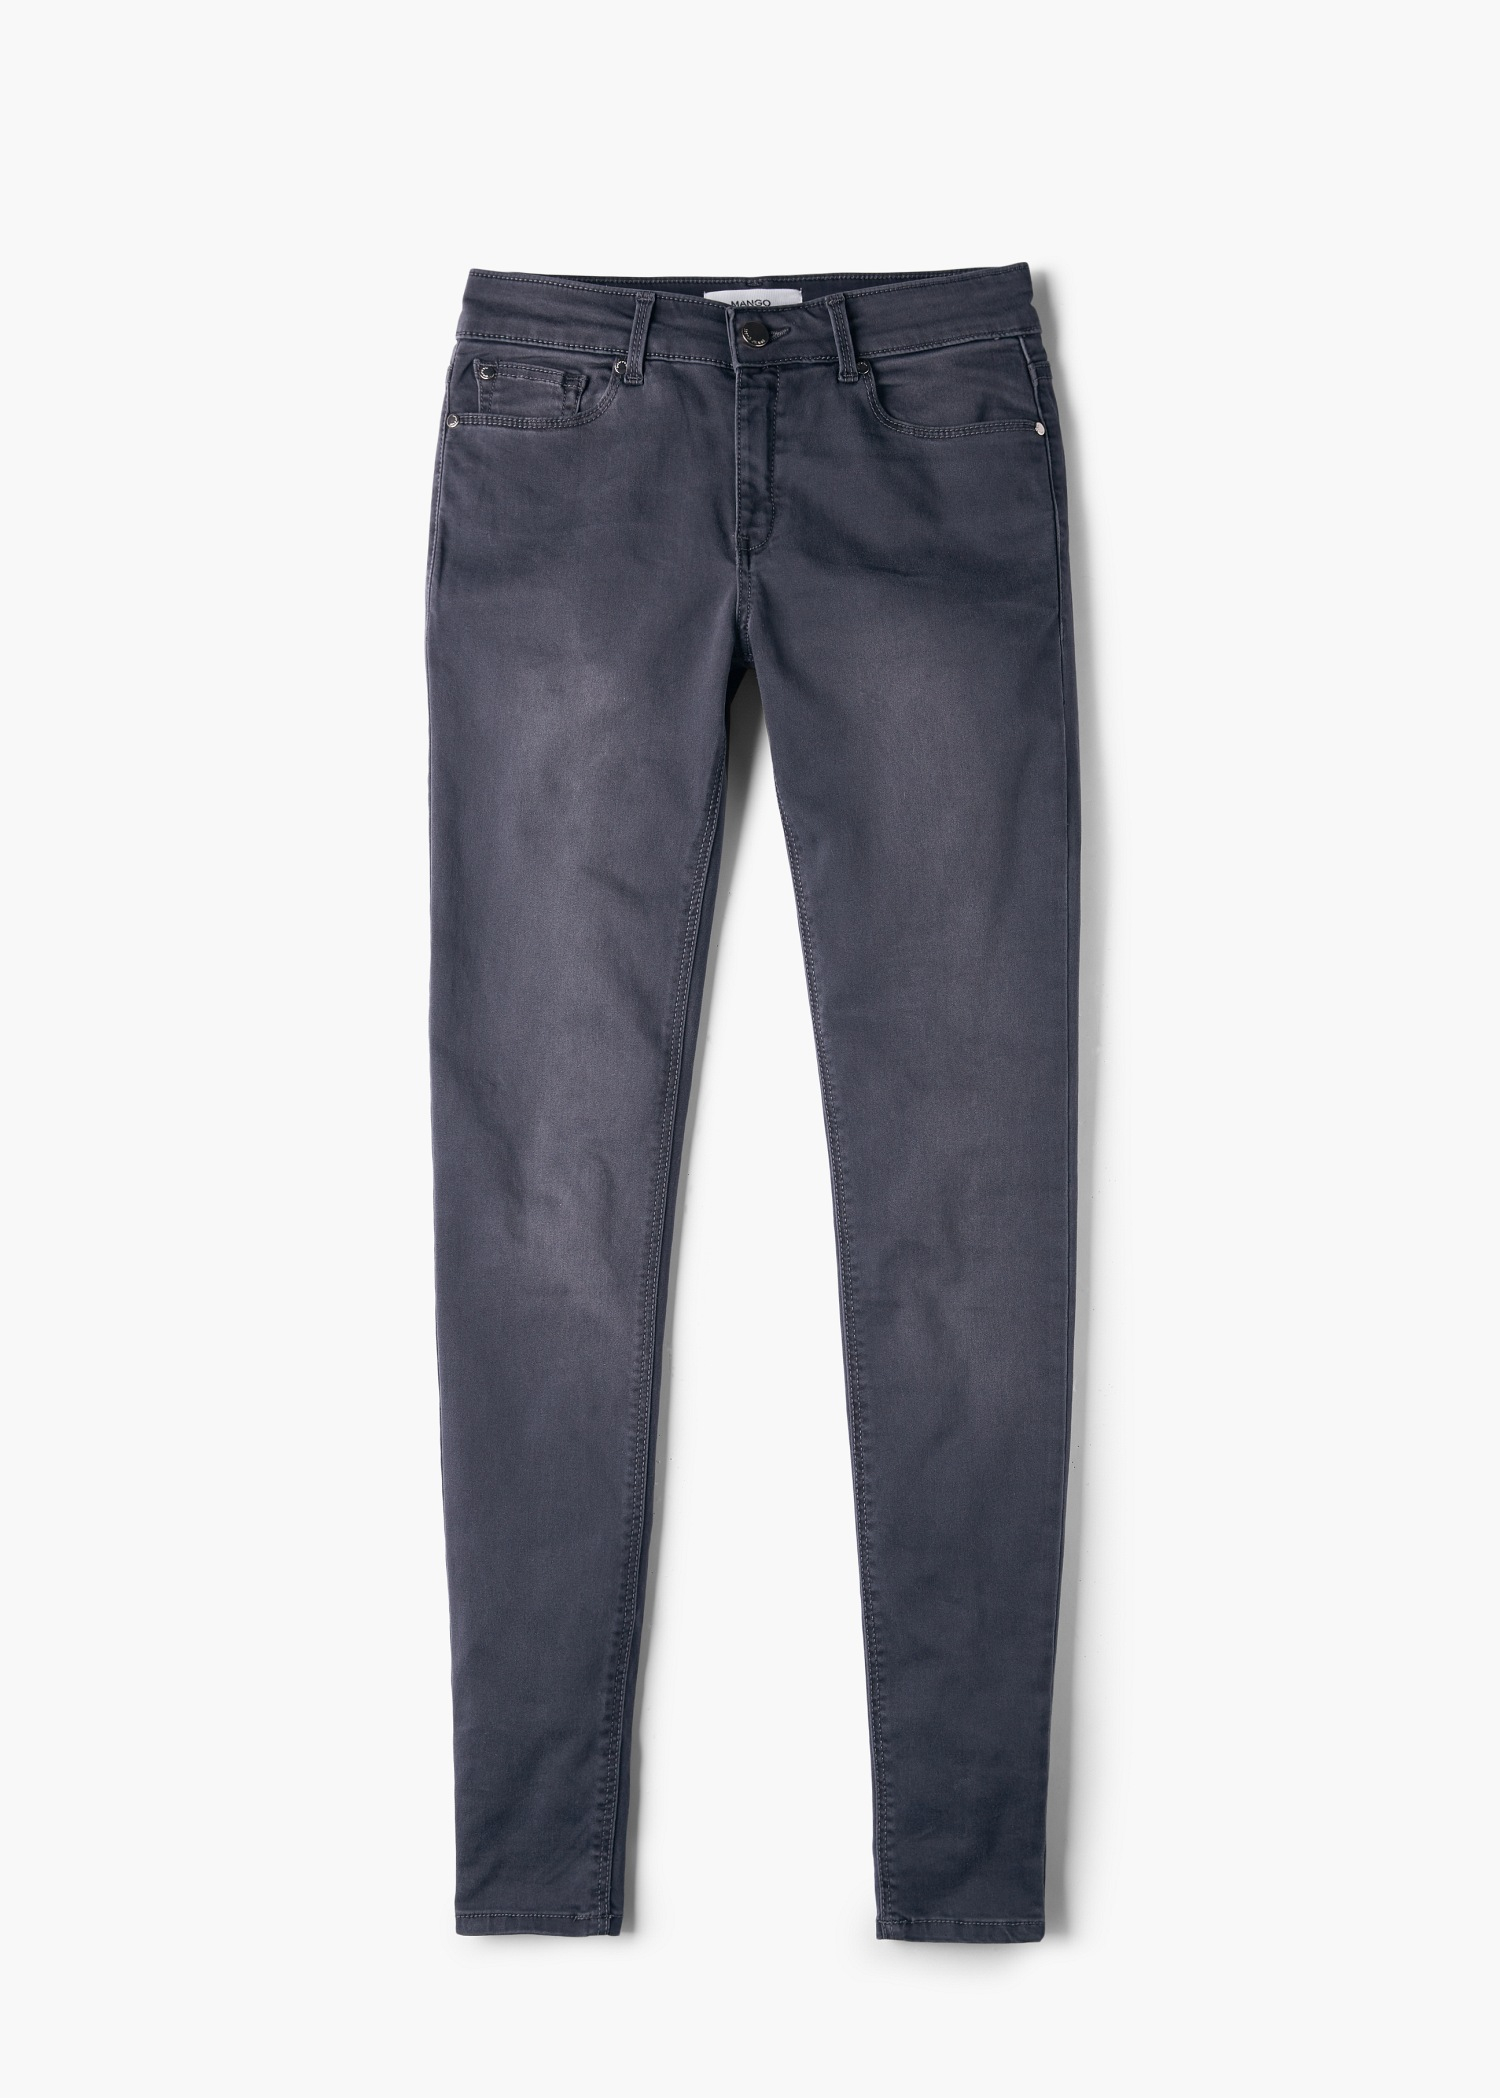 Mango Denim Skinny Elektra Jeans in Gray - Lyst